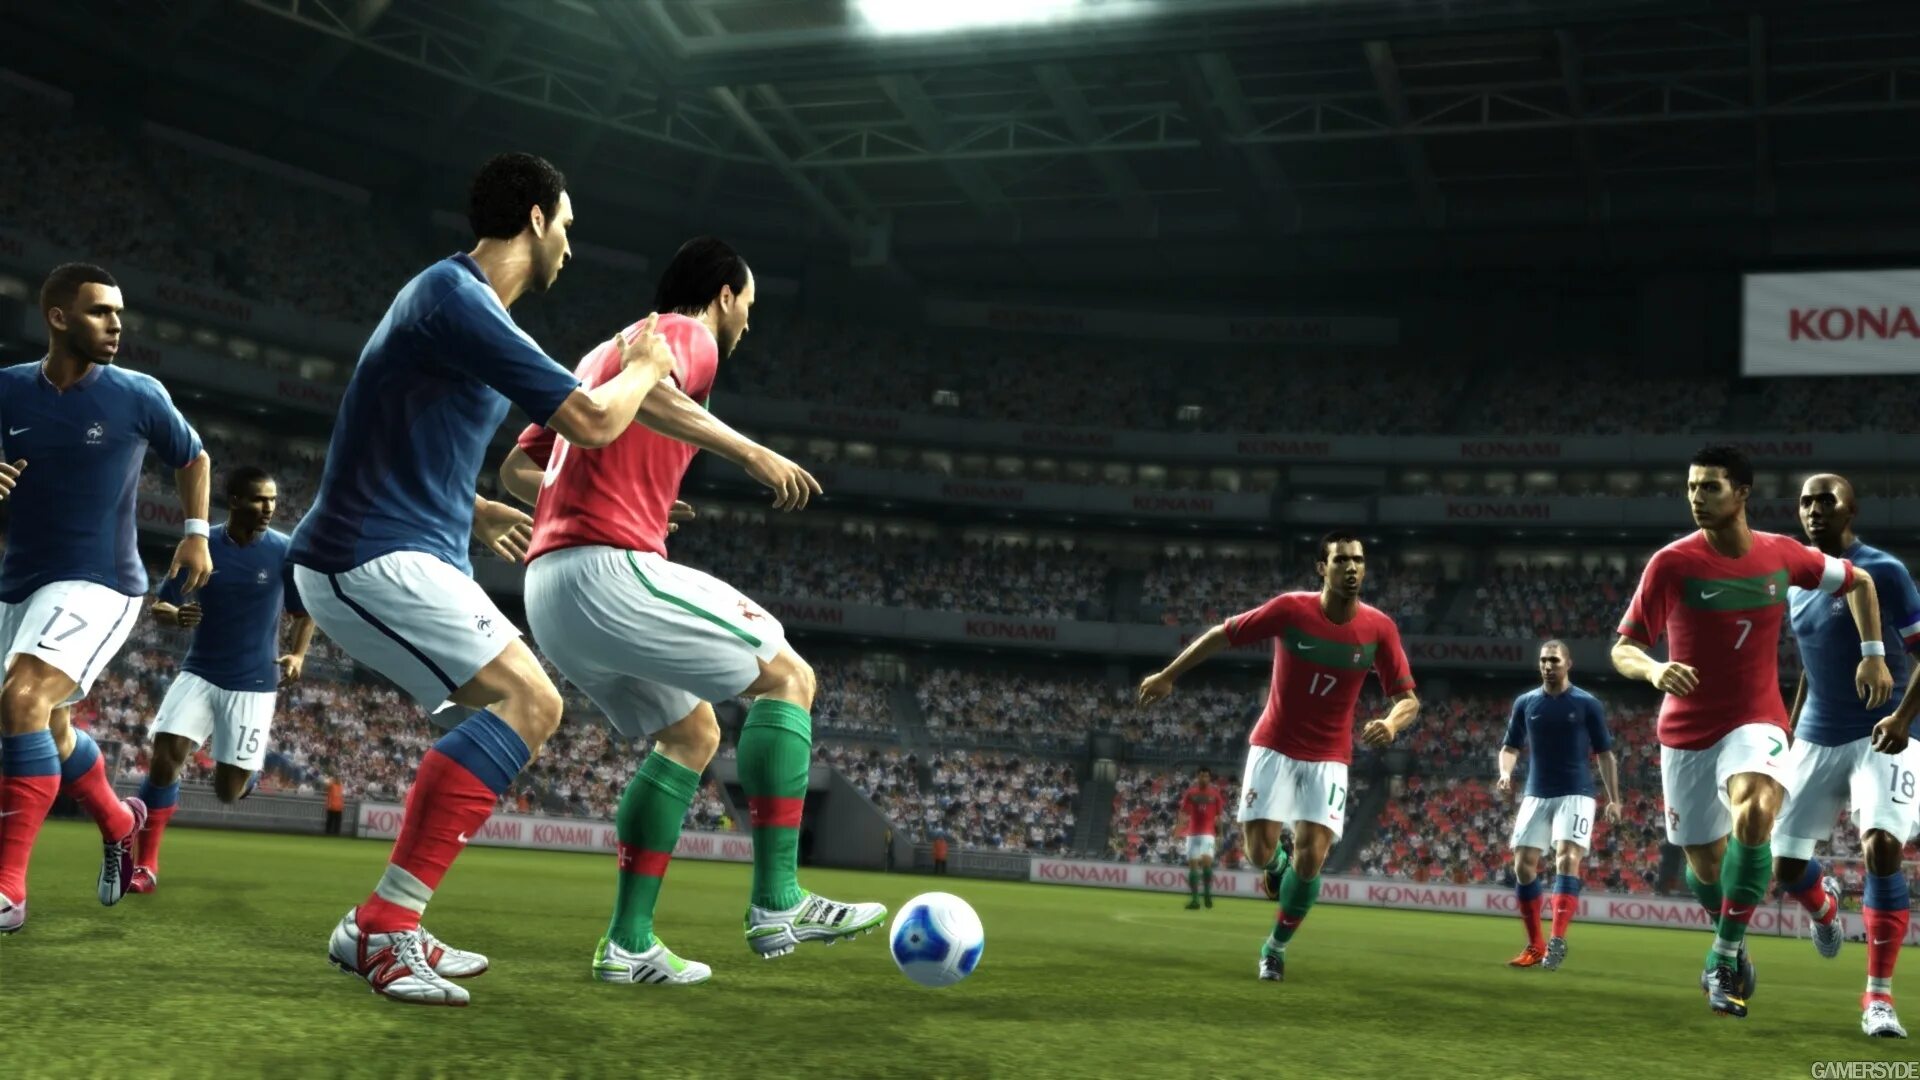 Игры 2012 2024. Pro Evolution Soccer 2013 Konami. Pro Evolution Soccer 3. Pro Evolution Soccer 2013 для компьютера. Pro Evolution Soccer 2012 без интернета.